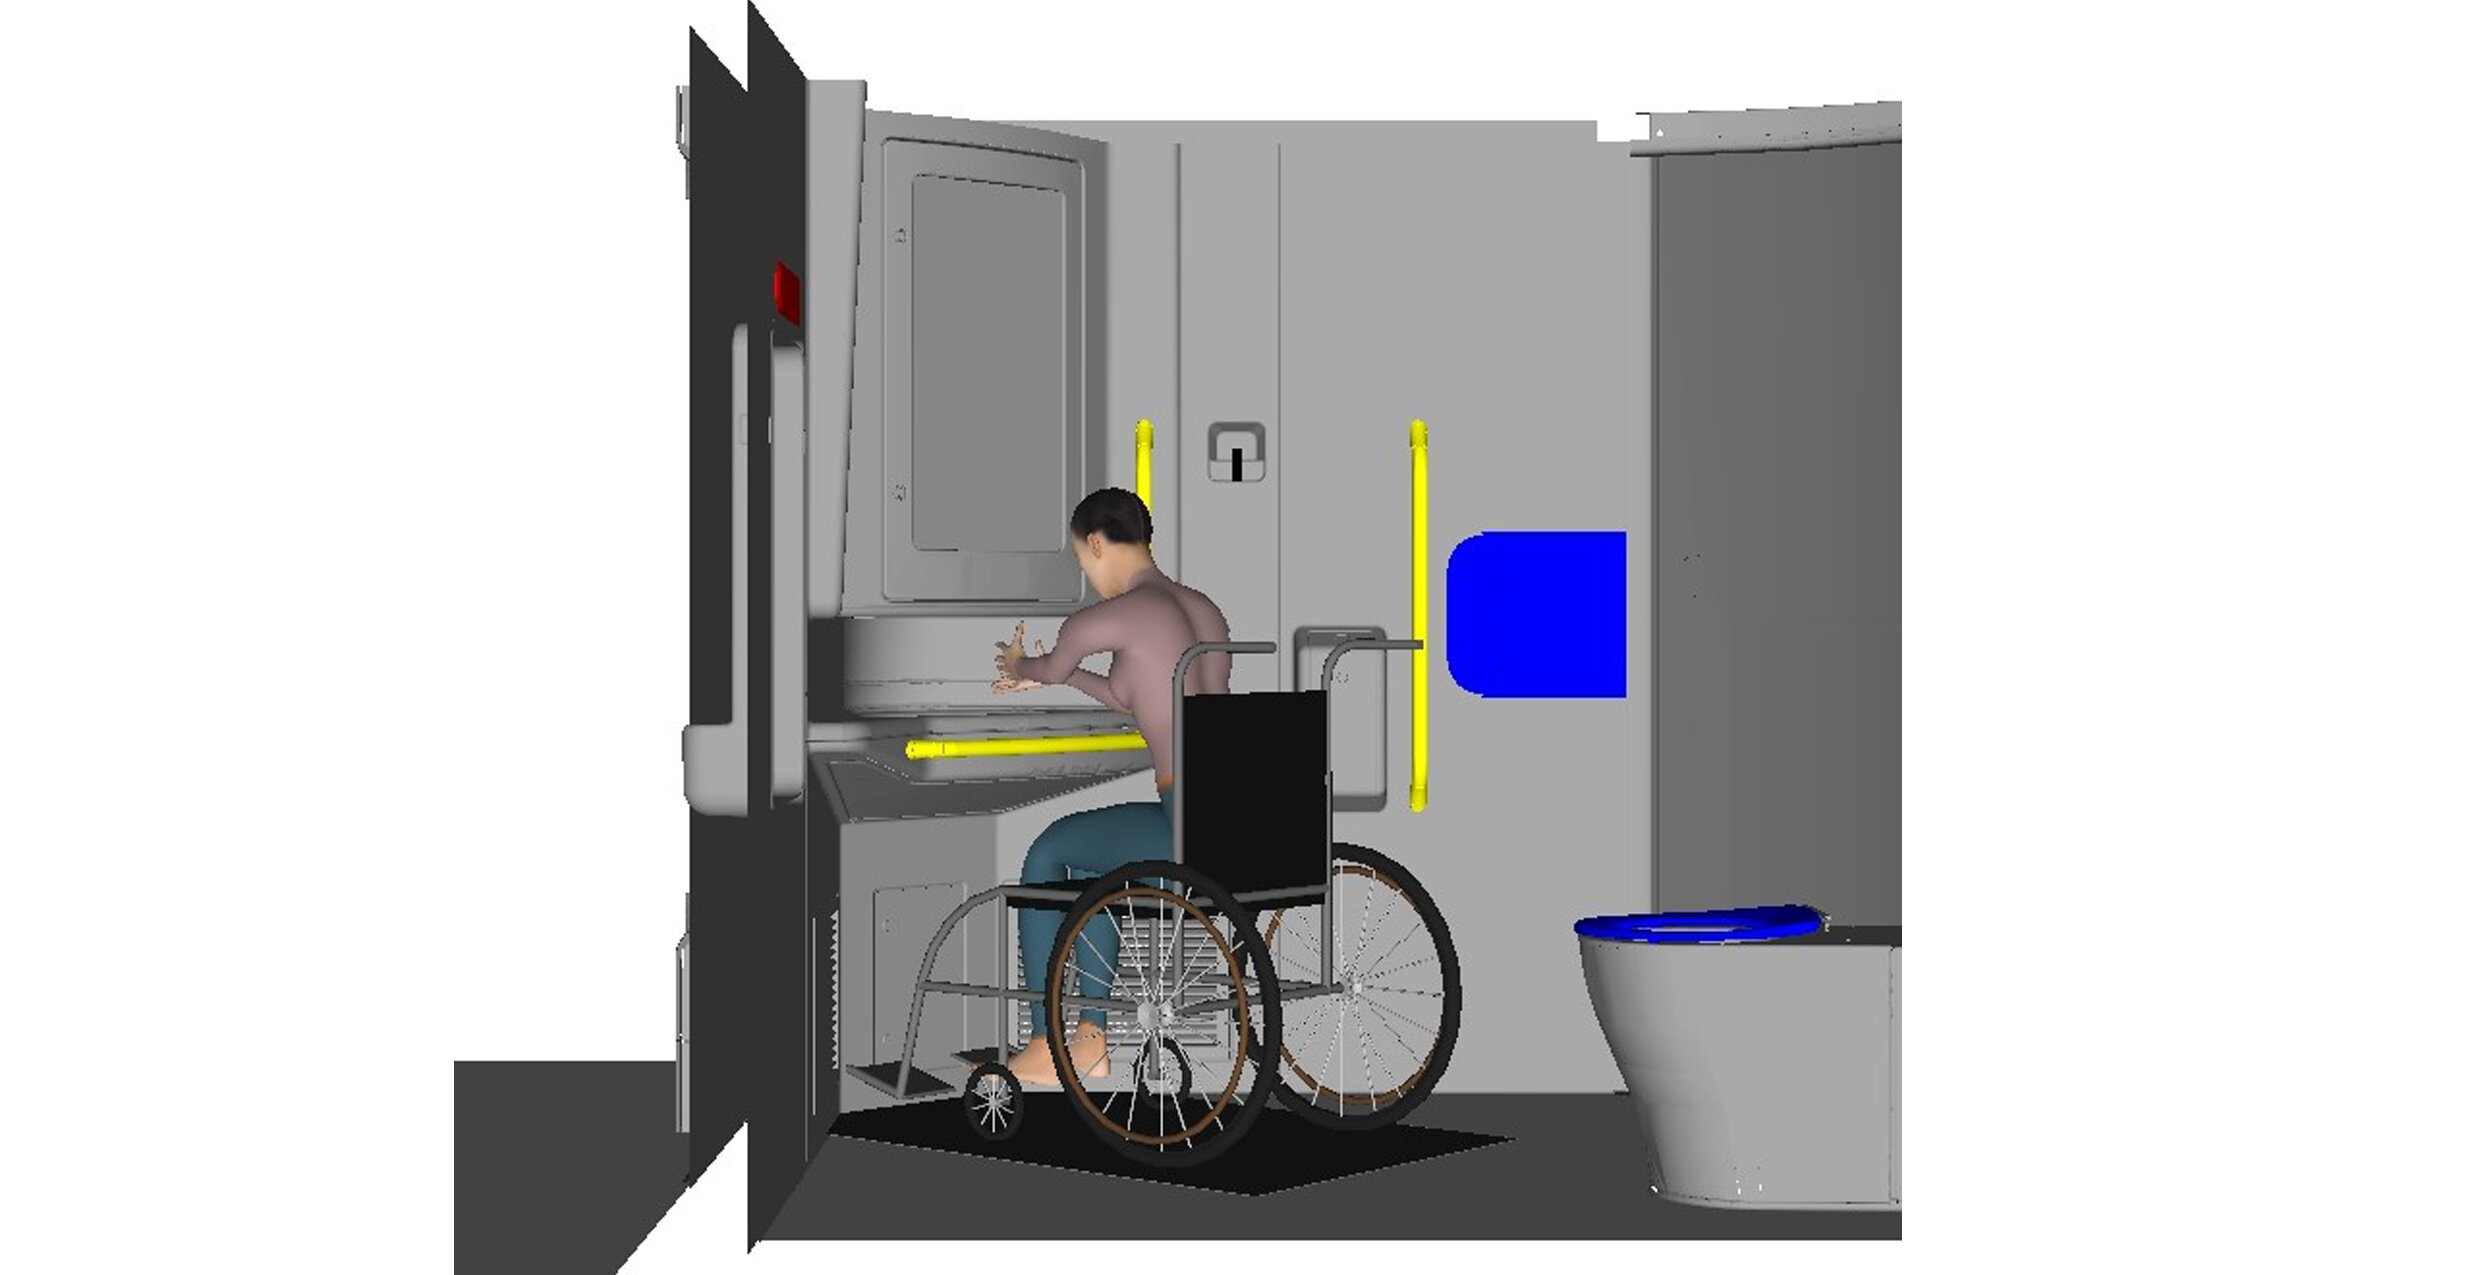 Erg_Accessibility_5F-Wheelchair-SinkReach.jpg